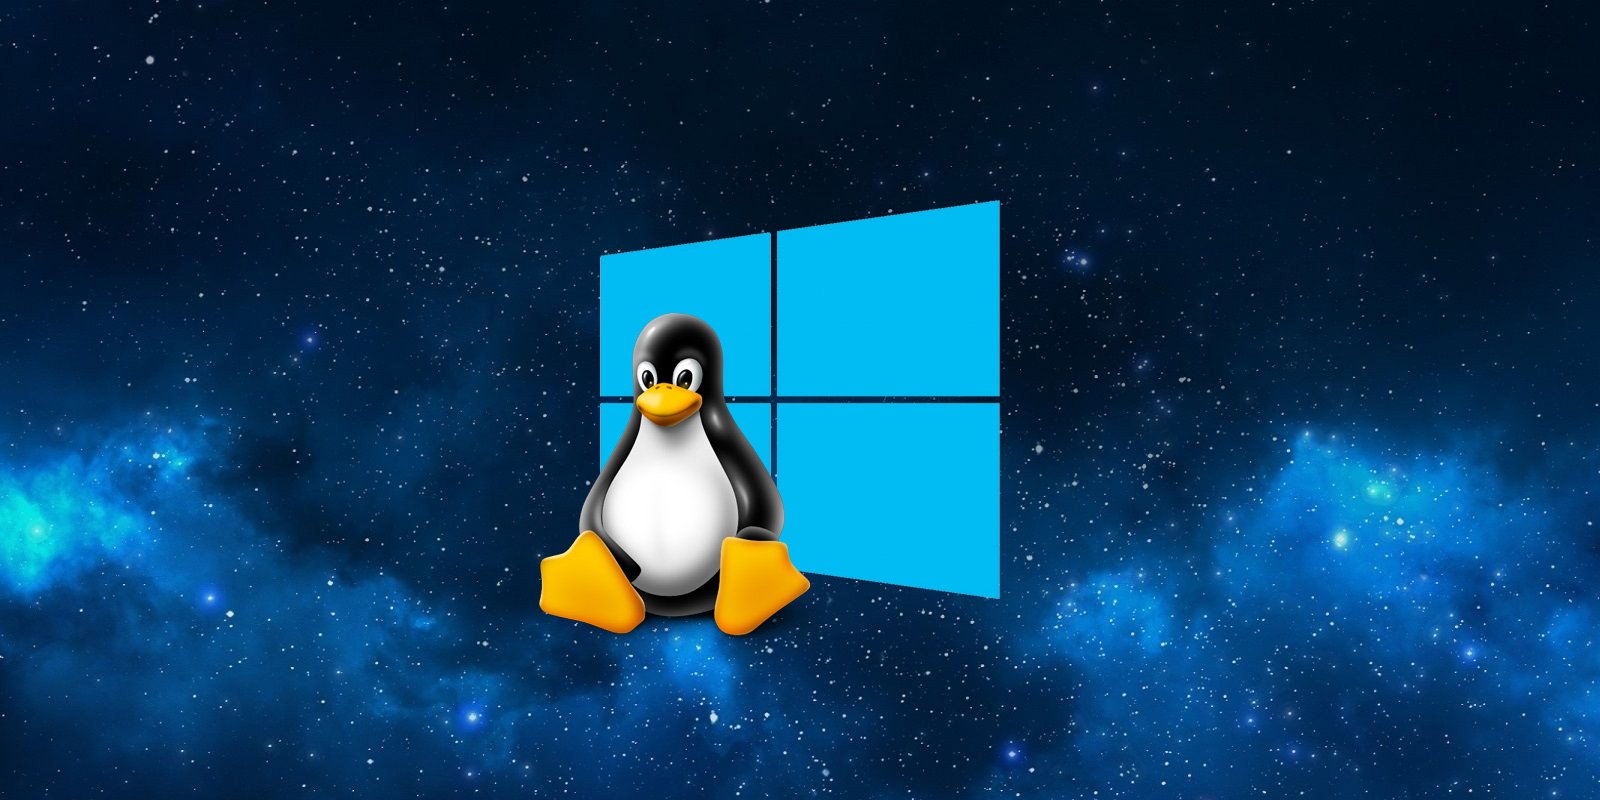 Subsistema de Windows para Linux